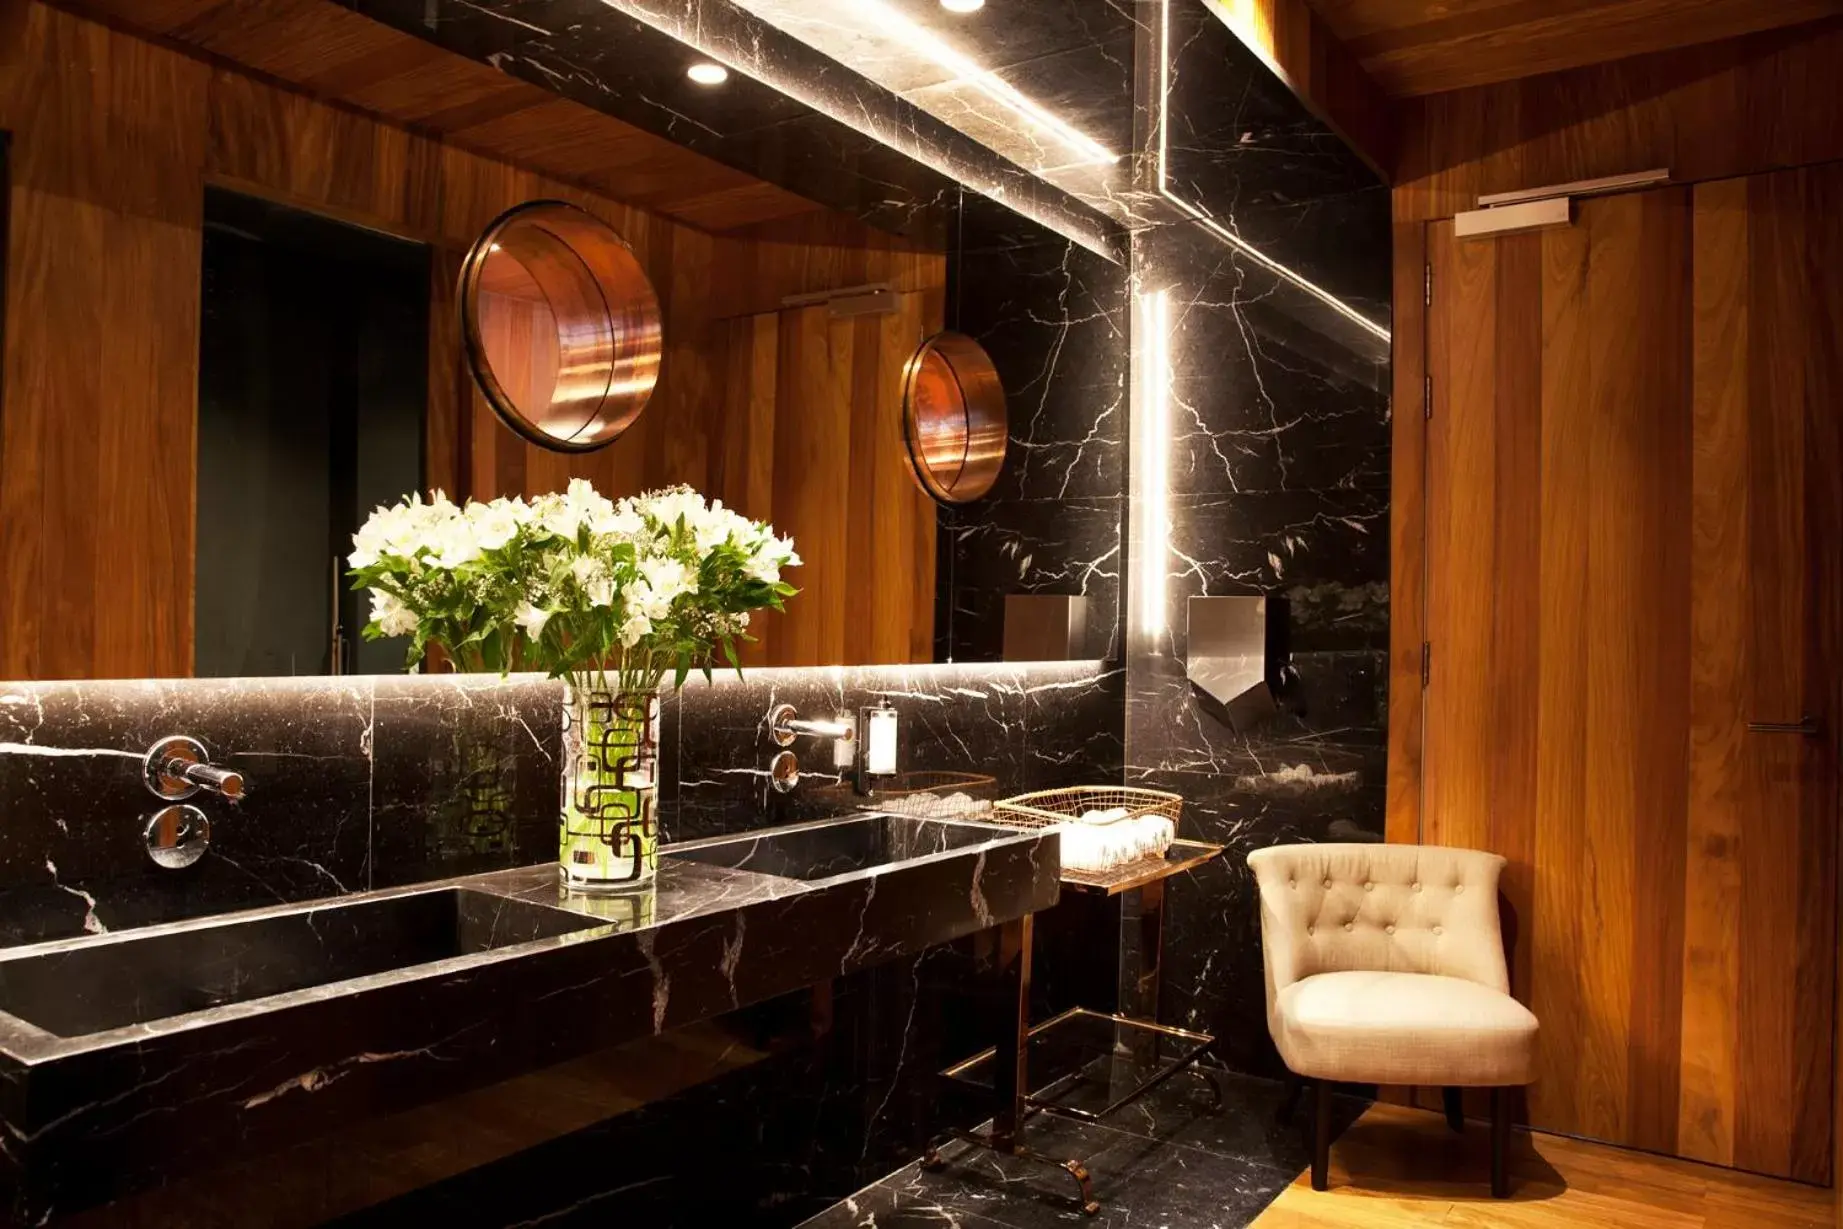 Area and facilities, Bathroom in Lasala Plaza Hotel